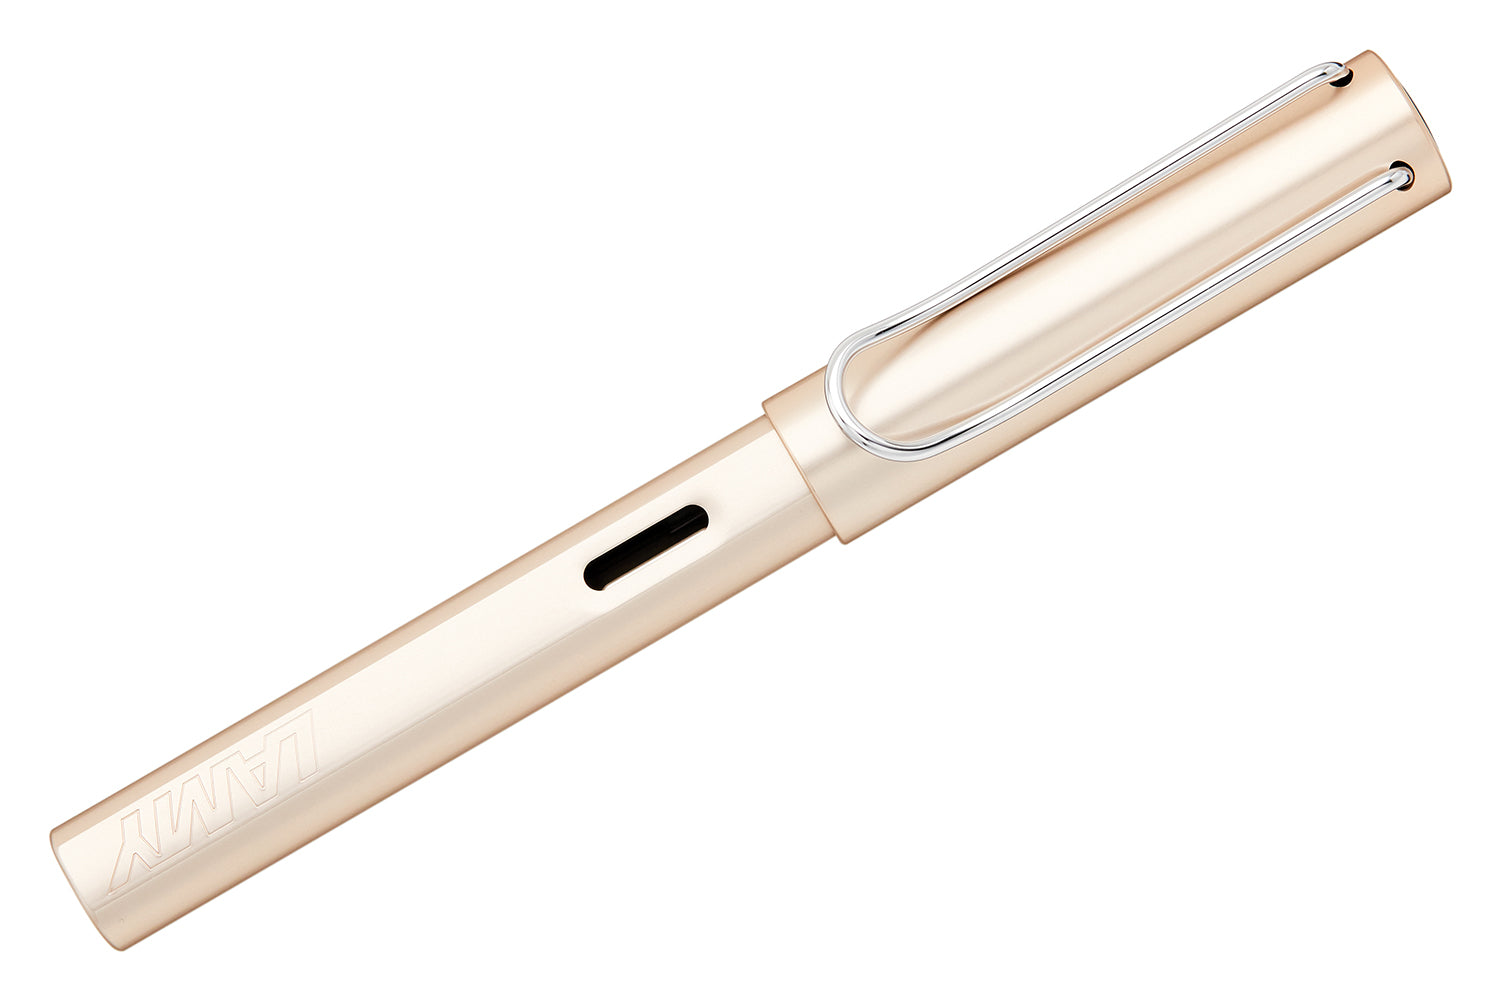 Lamy AL-Star Fountain Pen in Cosmic - Special Edition 2021 - Goldspot Pens